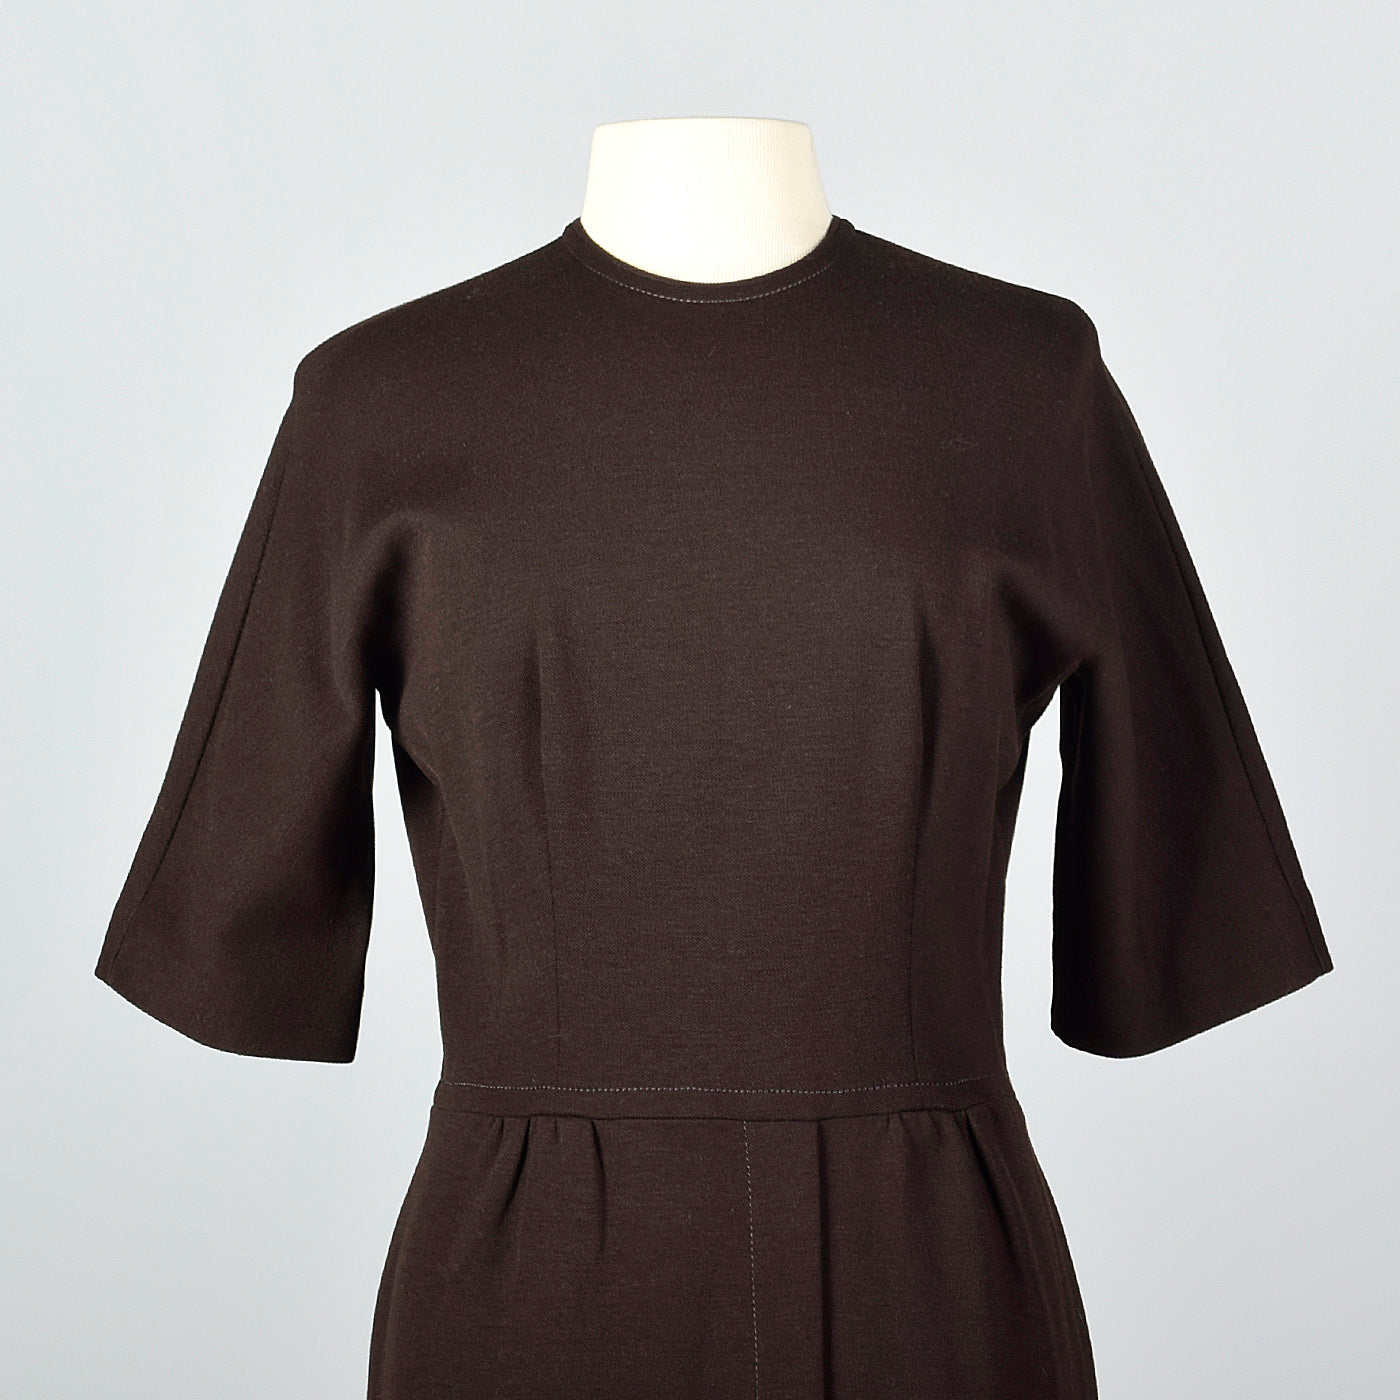 1950s Brown Knit Dress